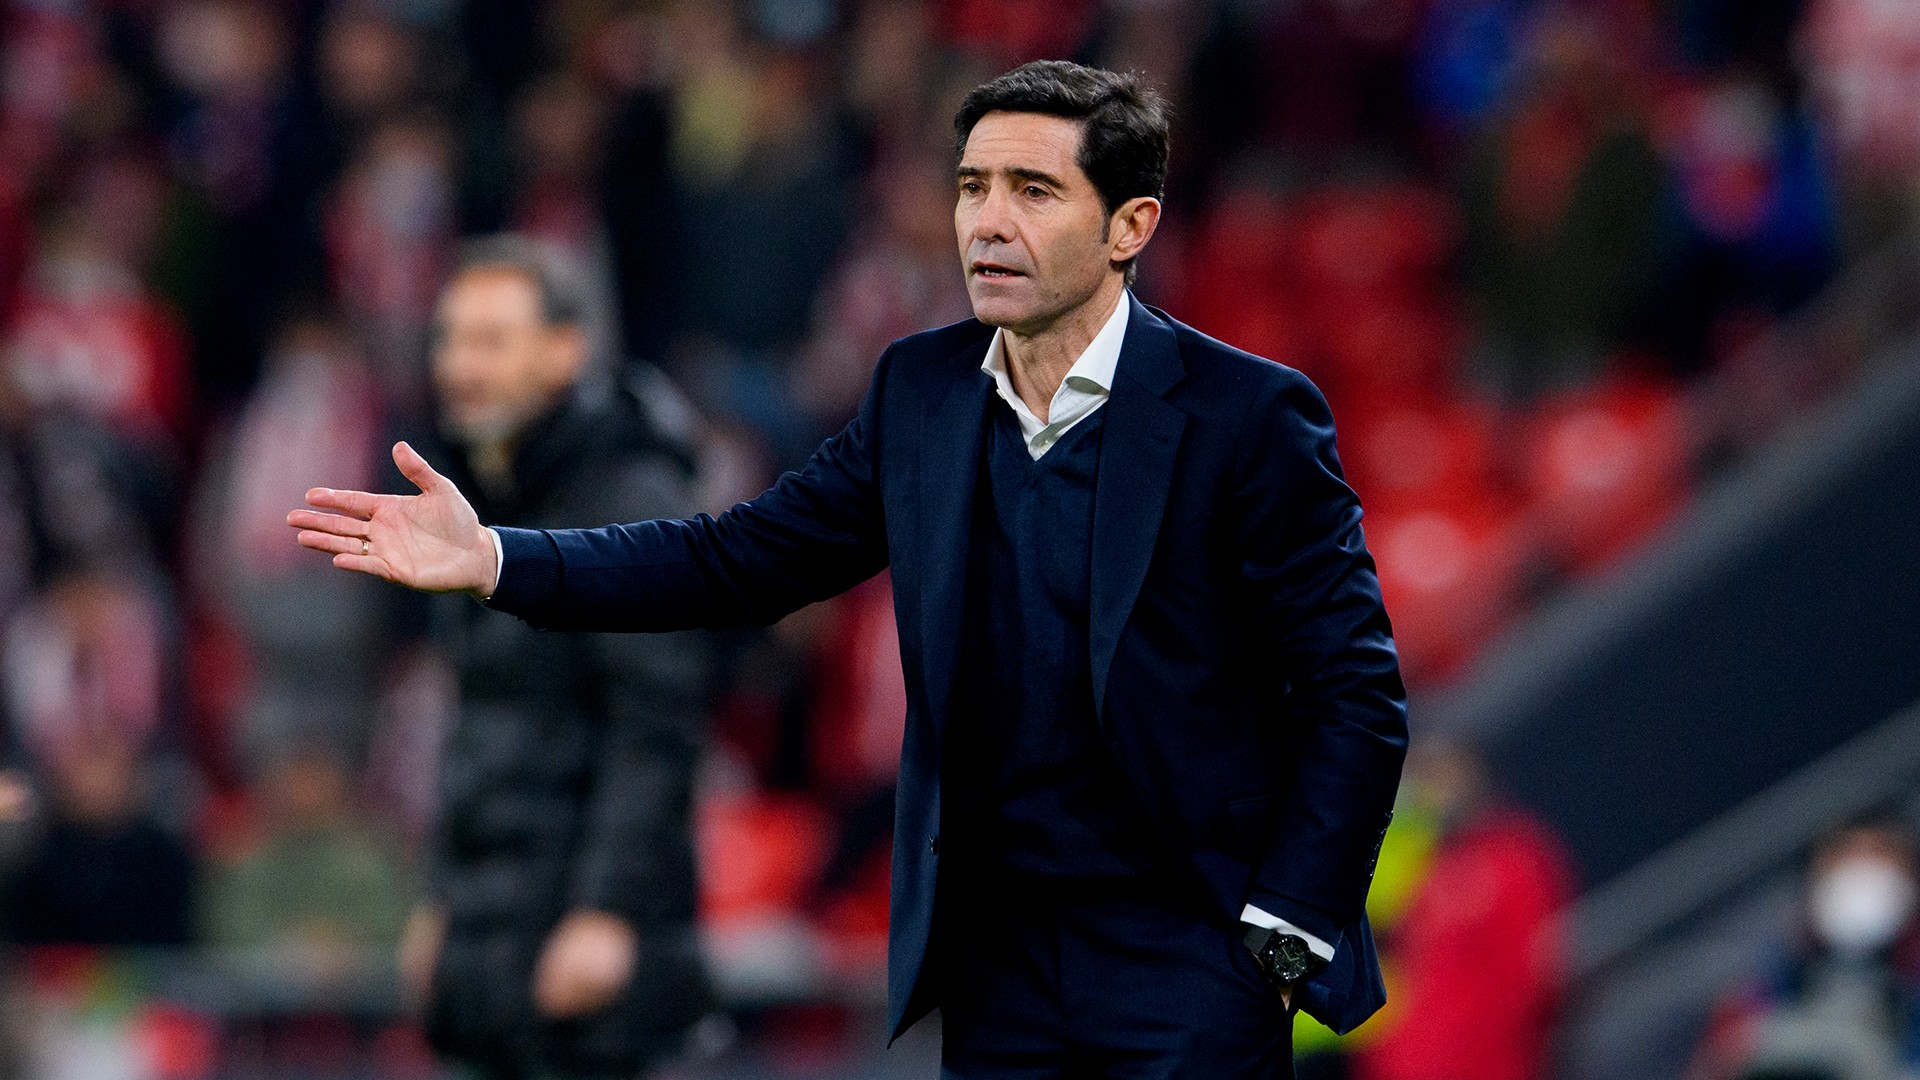 SportMob – Marcelino is in Everton's hunt as a new head coach